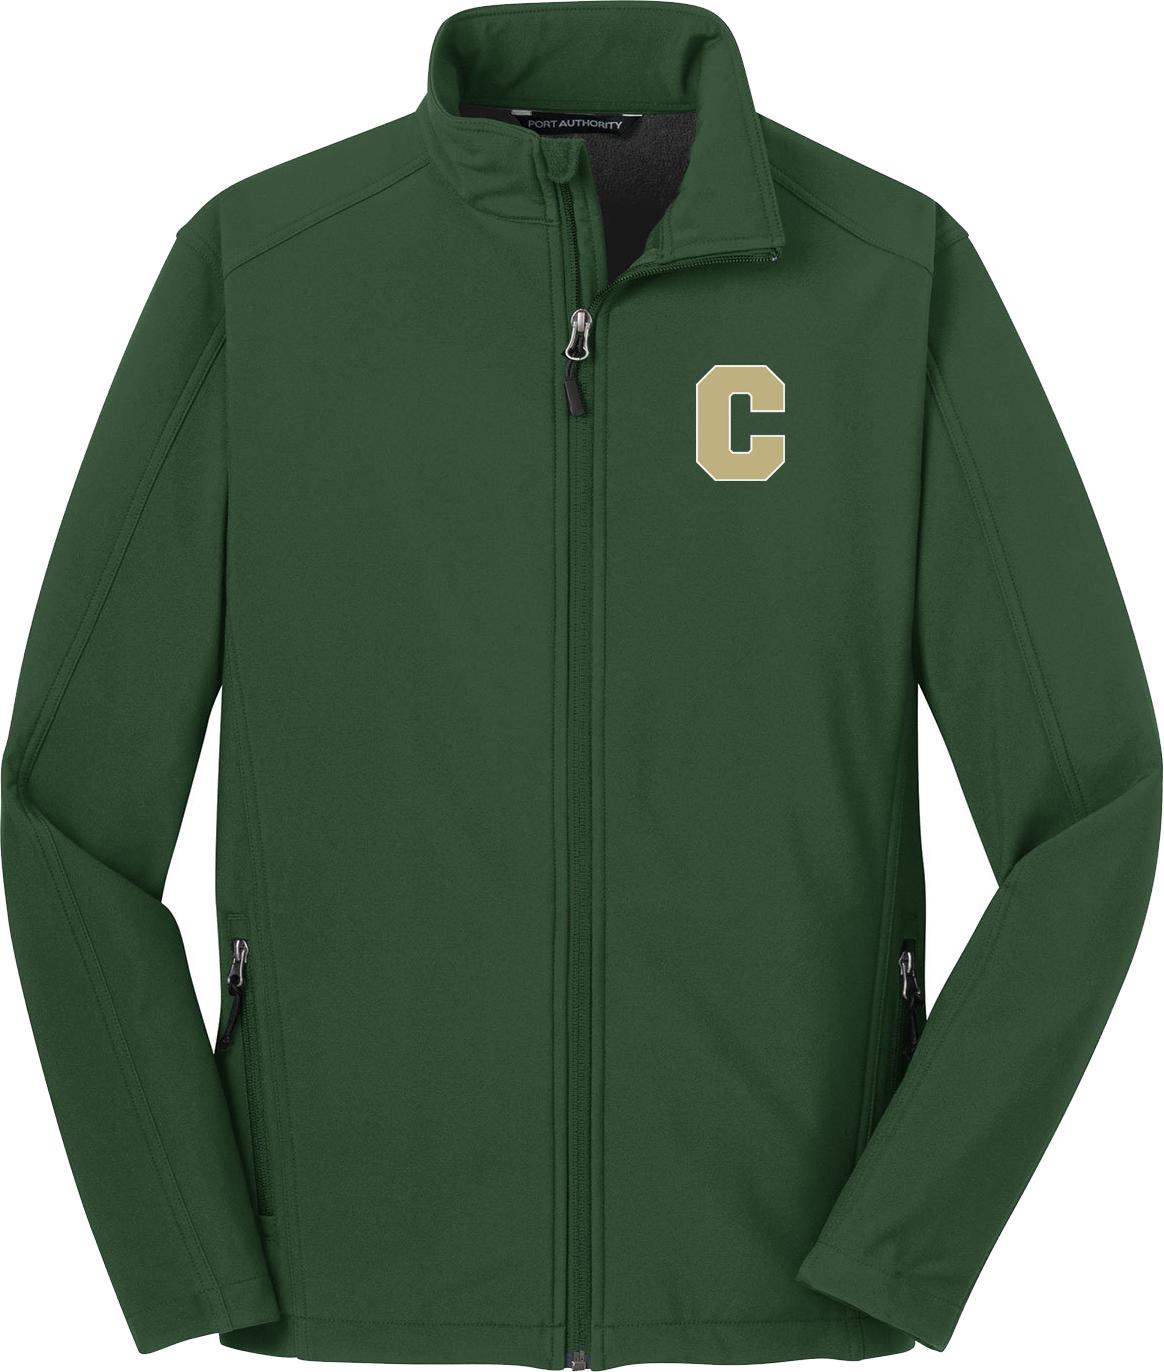 Century Lacrosse Green Soft Shell Jacket